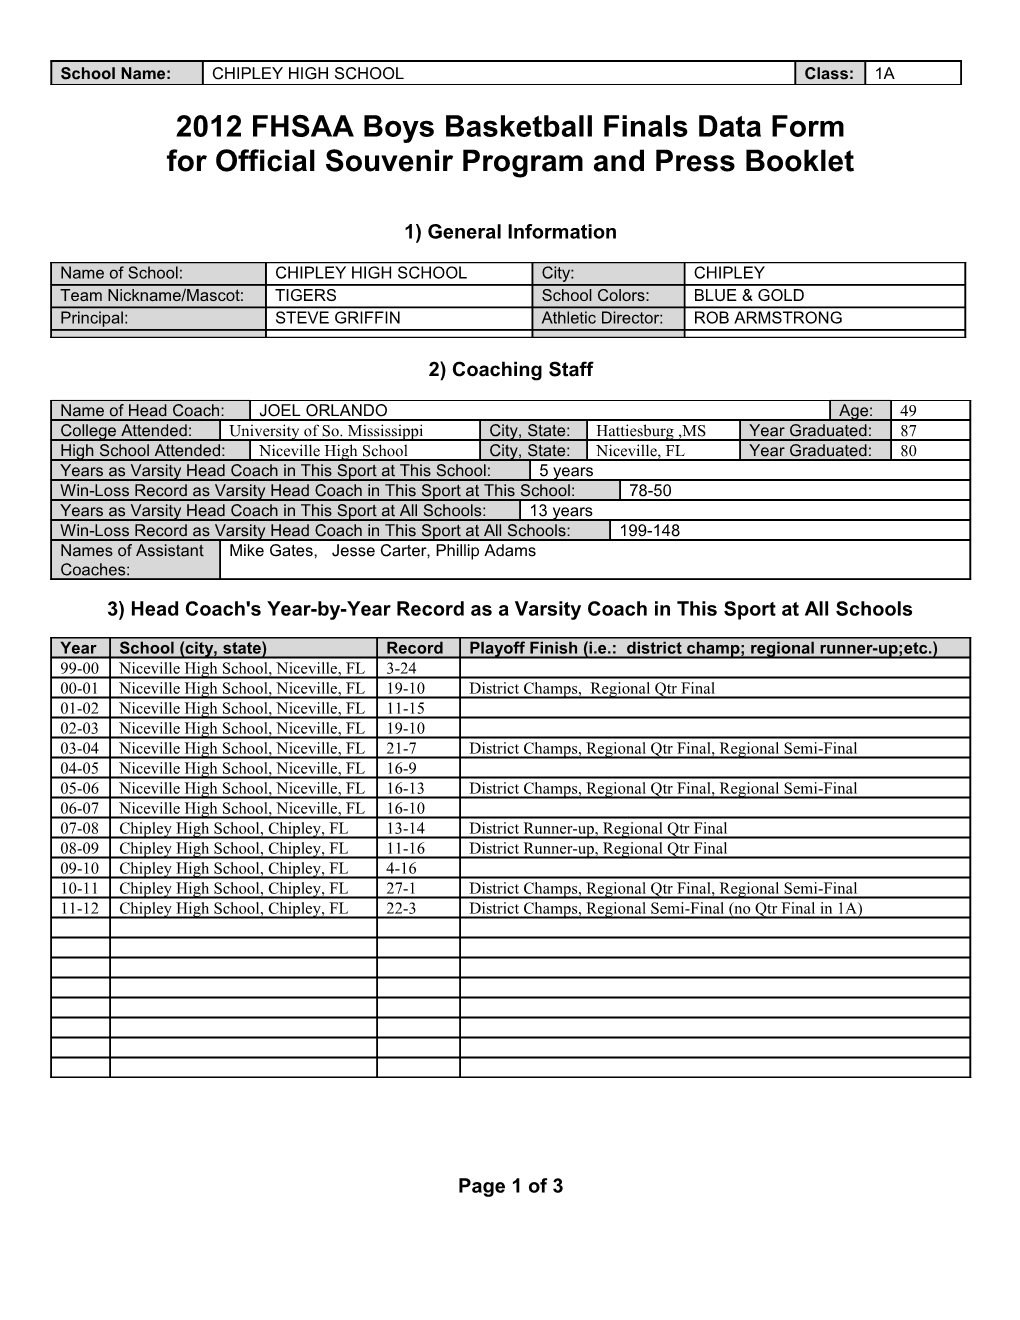 2012 FHSAA Boys Basketball Finals Data Form